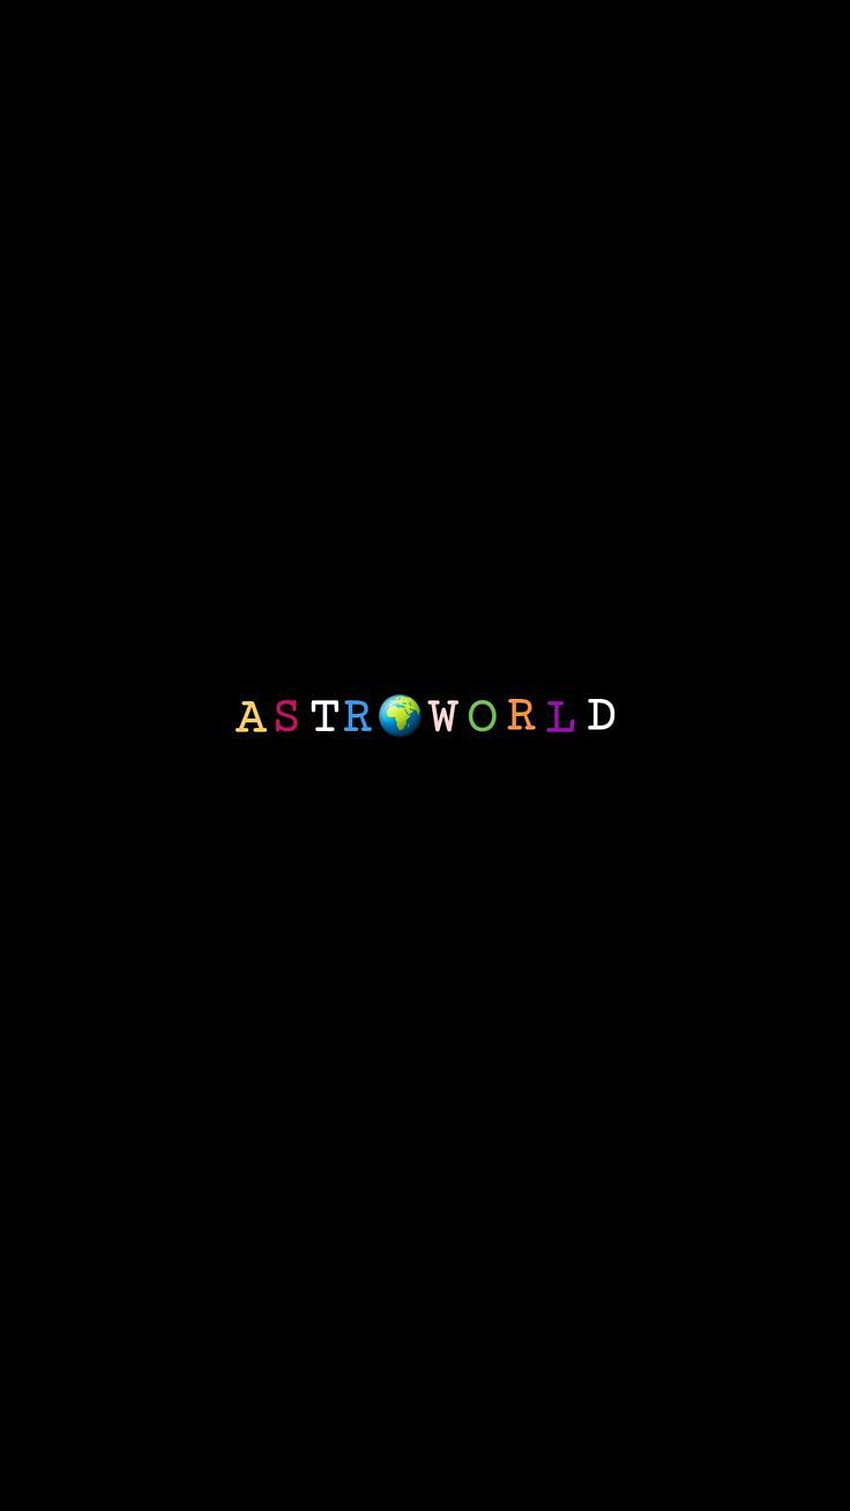 55 Astroworld HD Retro Wallpapers  WallpaperSafari